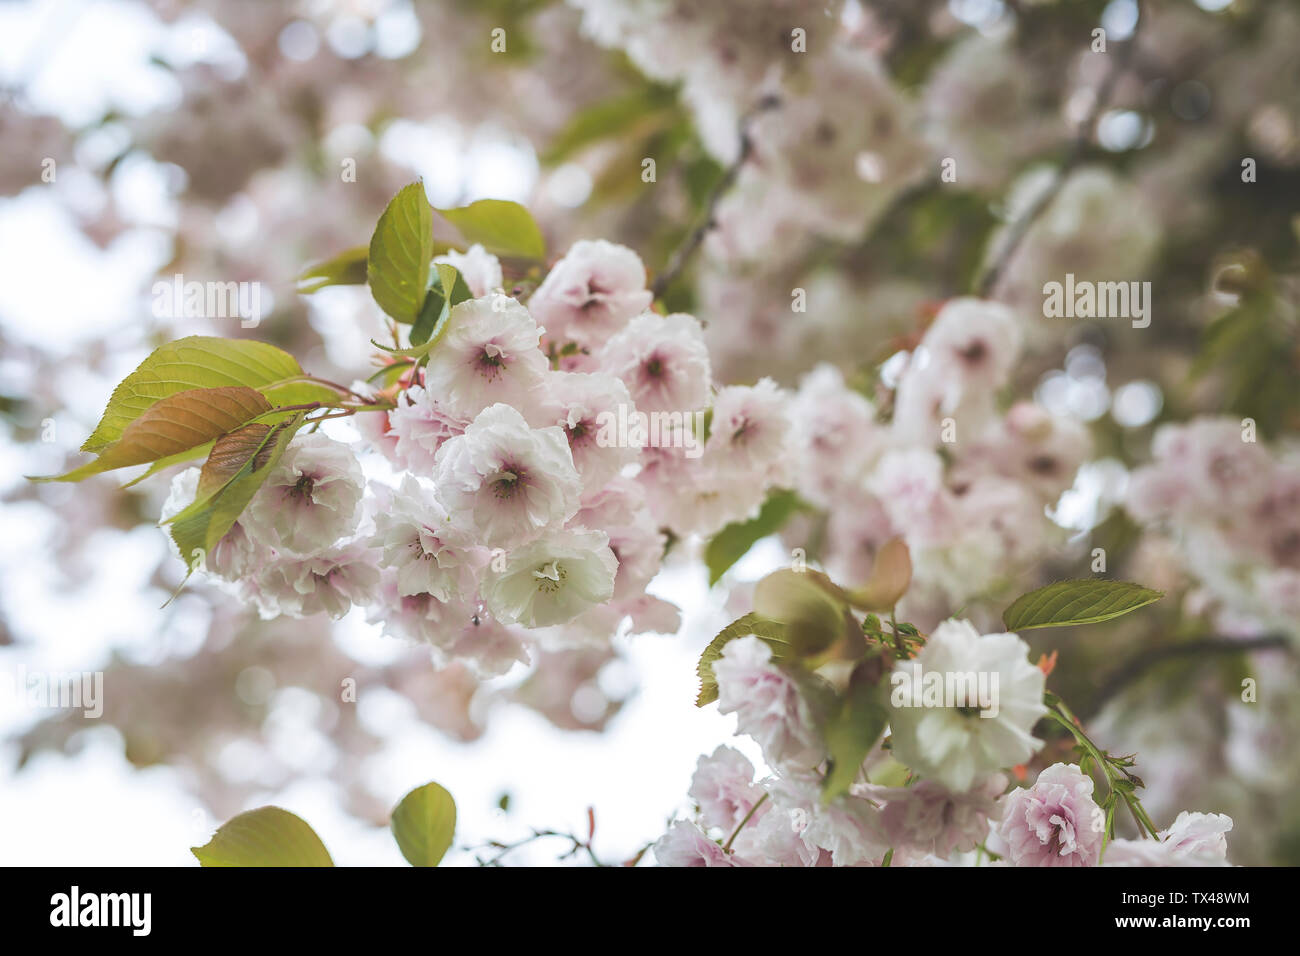 Germany, Saxony, Dresden, almond blossoms, Prunus triloba Stock Photo